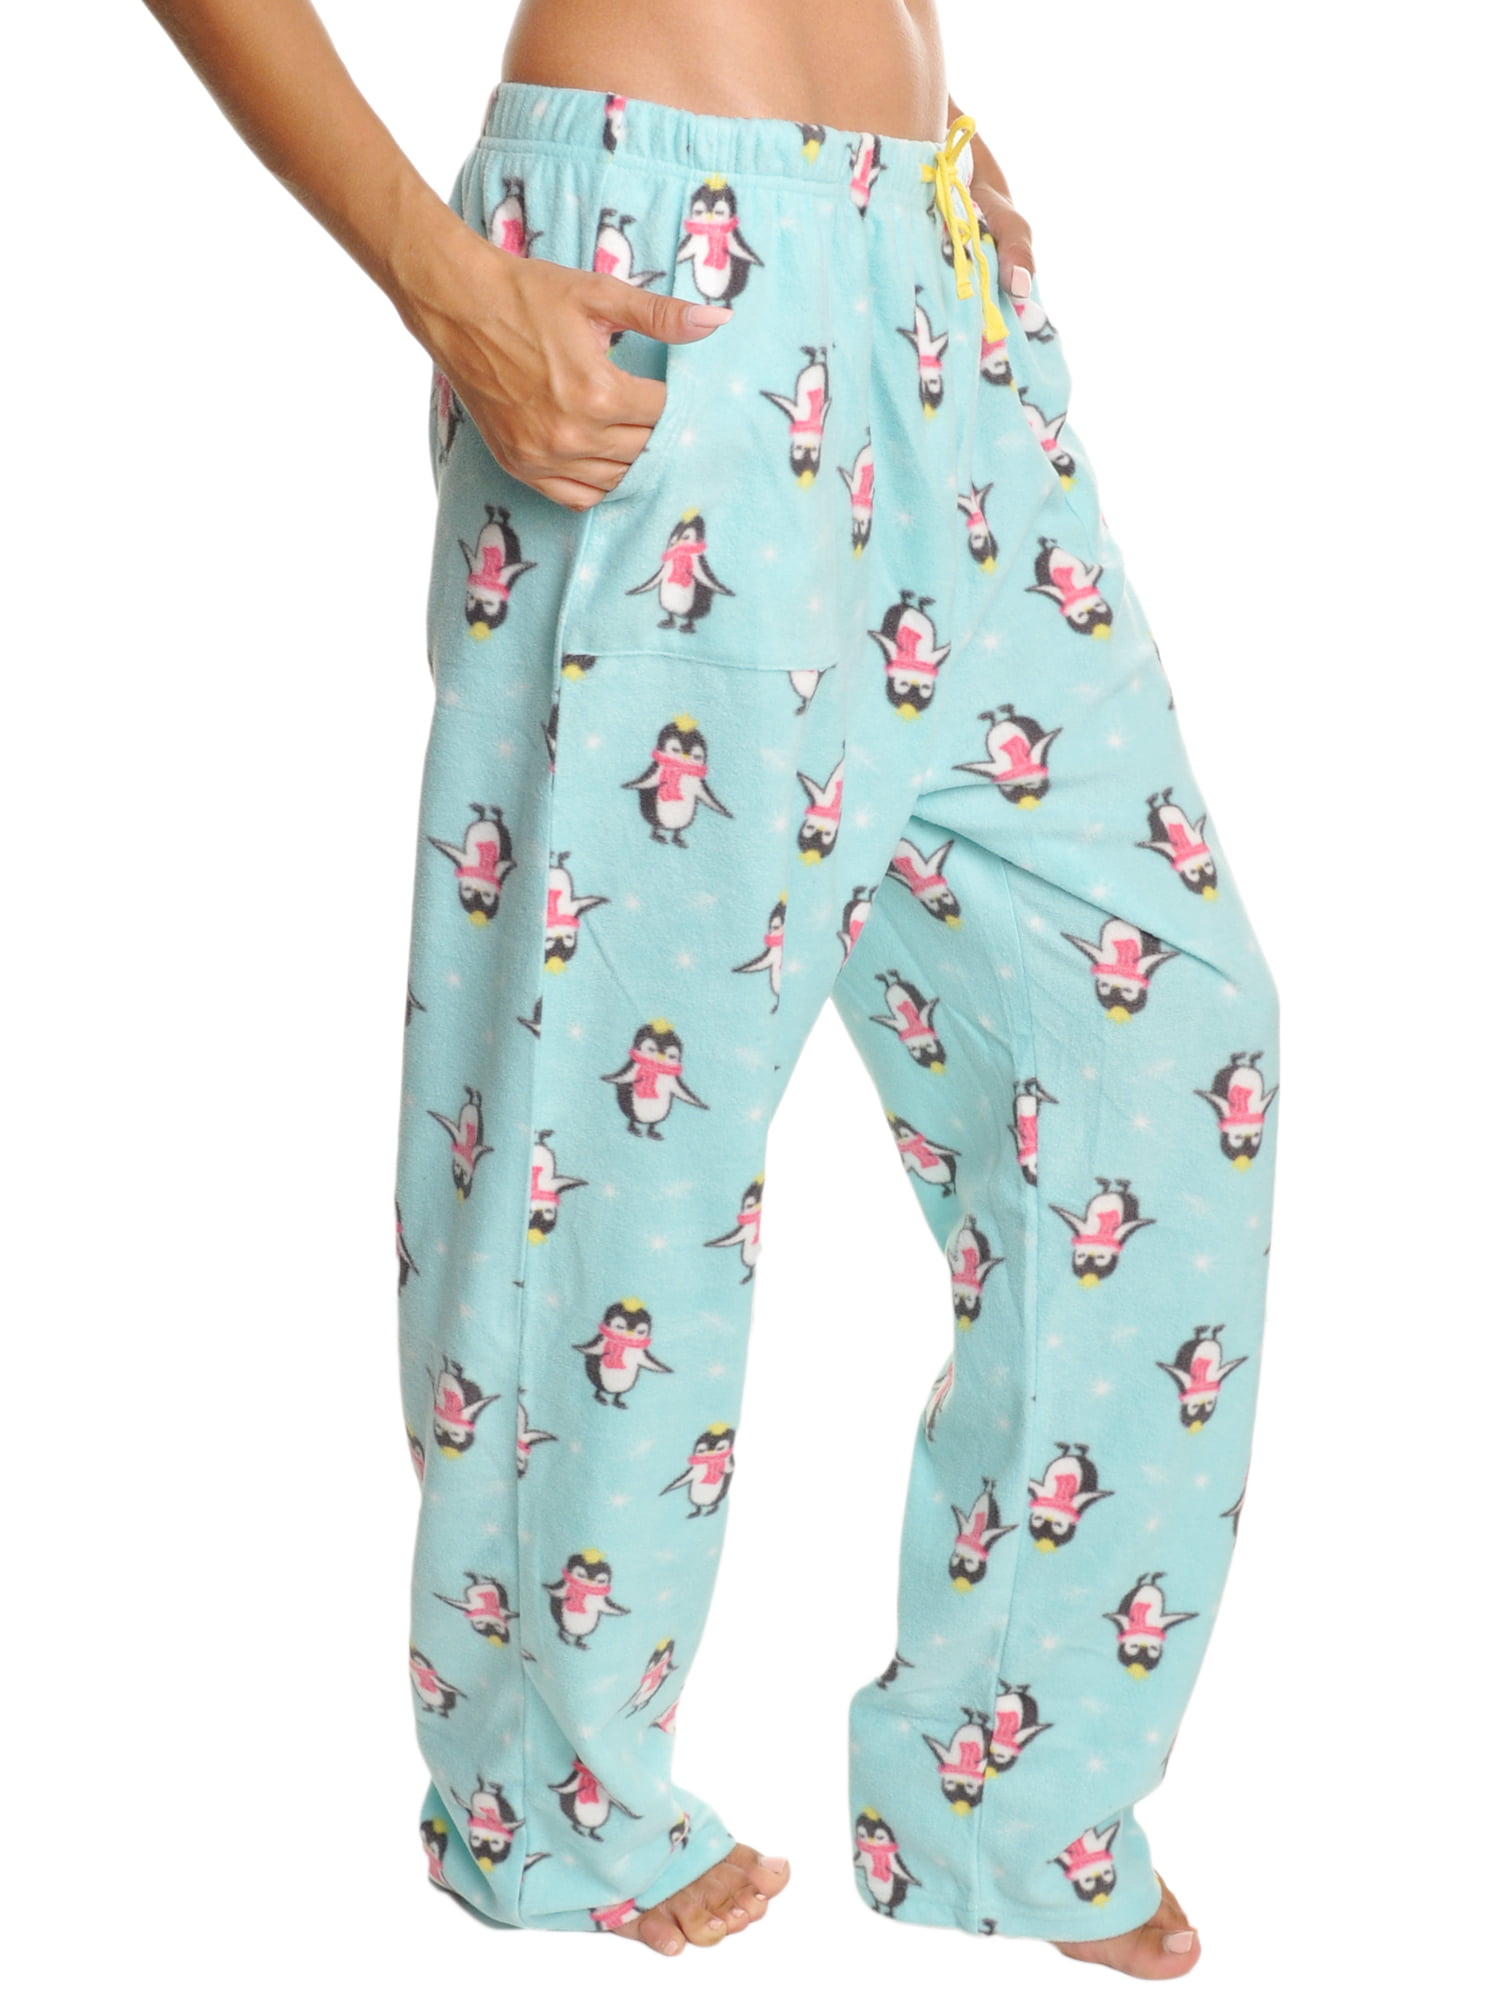 beifon Ladies Pajama Pants Long Pyjama Pants Pajama Pants Soft Sleep Pants Bottoms Elastic Waist Casual Pants with Hair Band for Ladies 